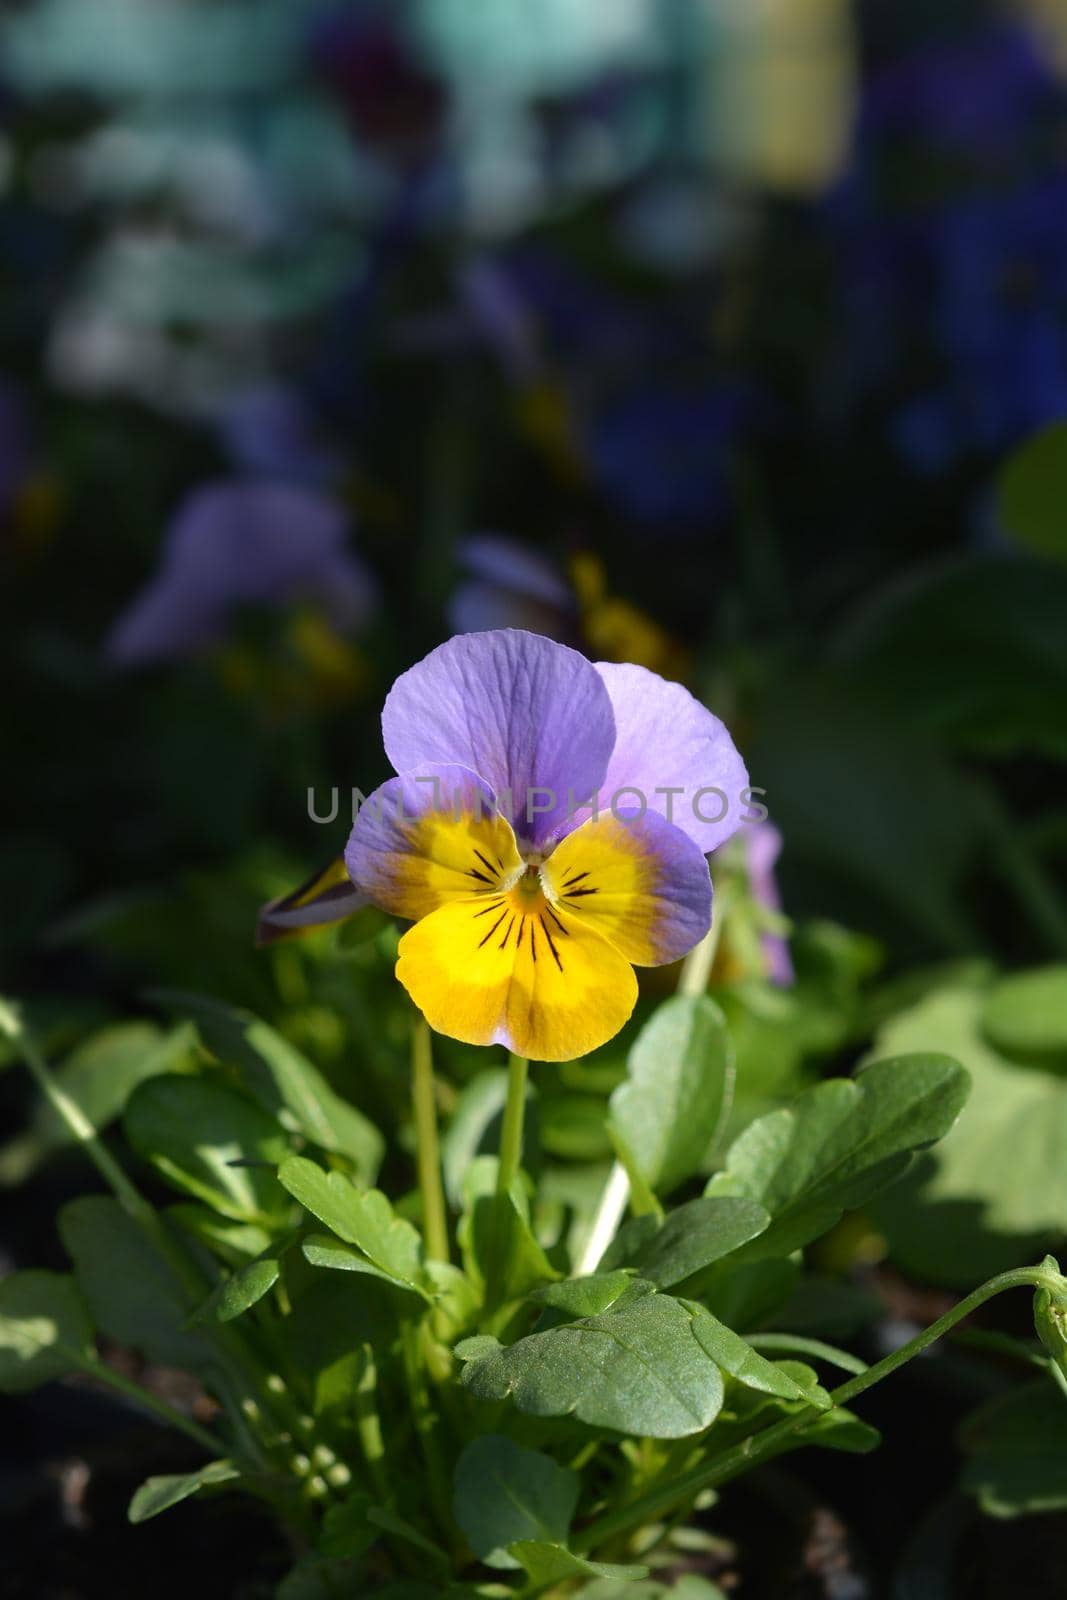 Horned violet flower - Latin name - Viola cornuta